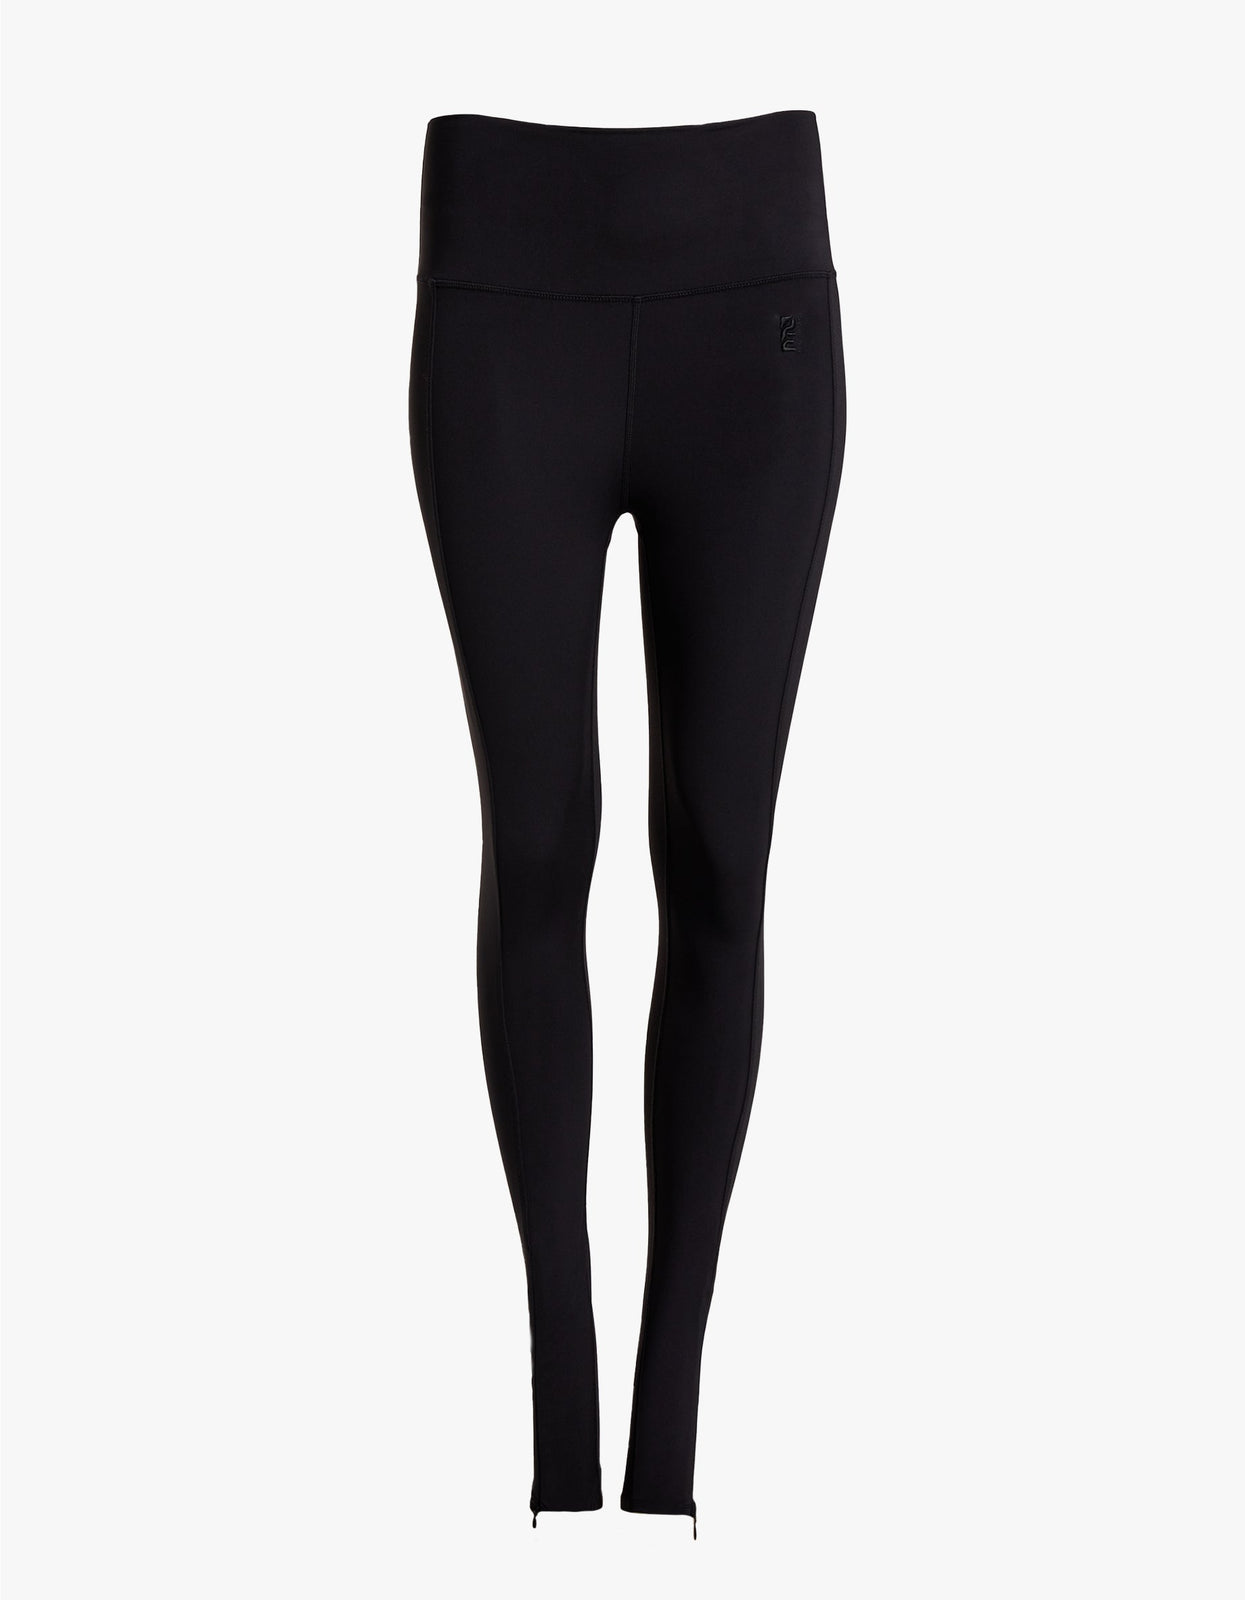 Amplify Legging - Black  Shop womens tops, Black leggings, How to wear